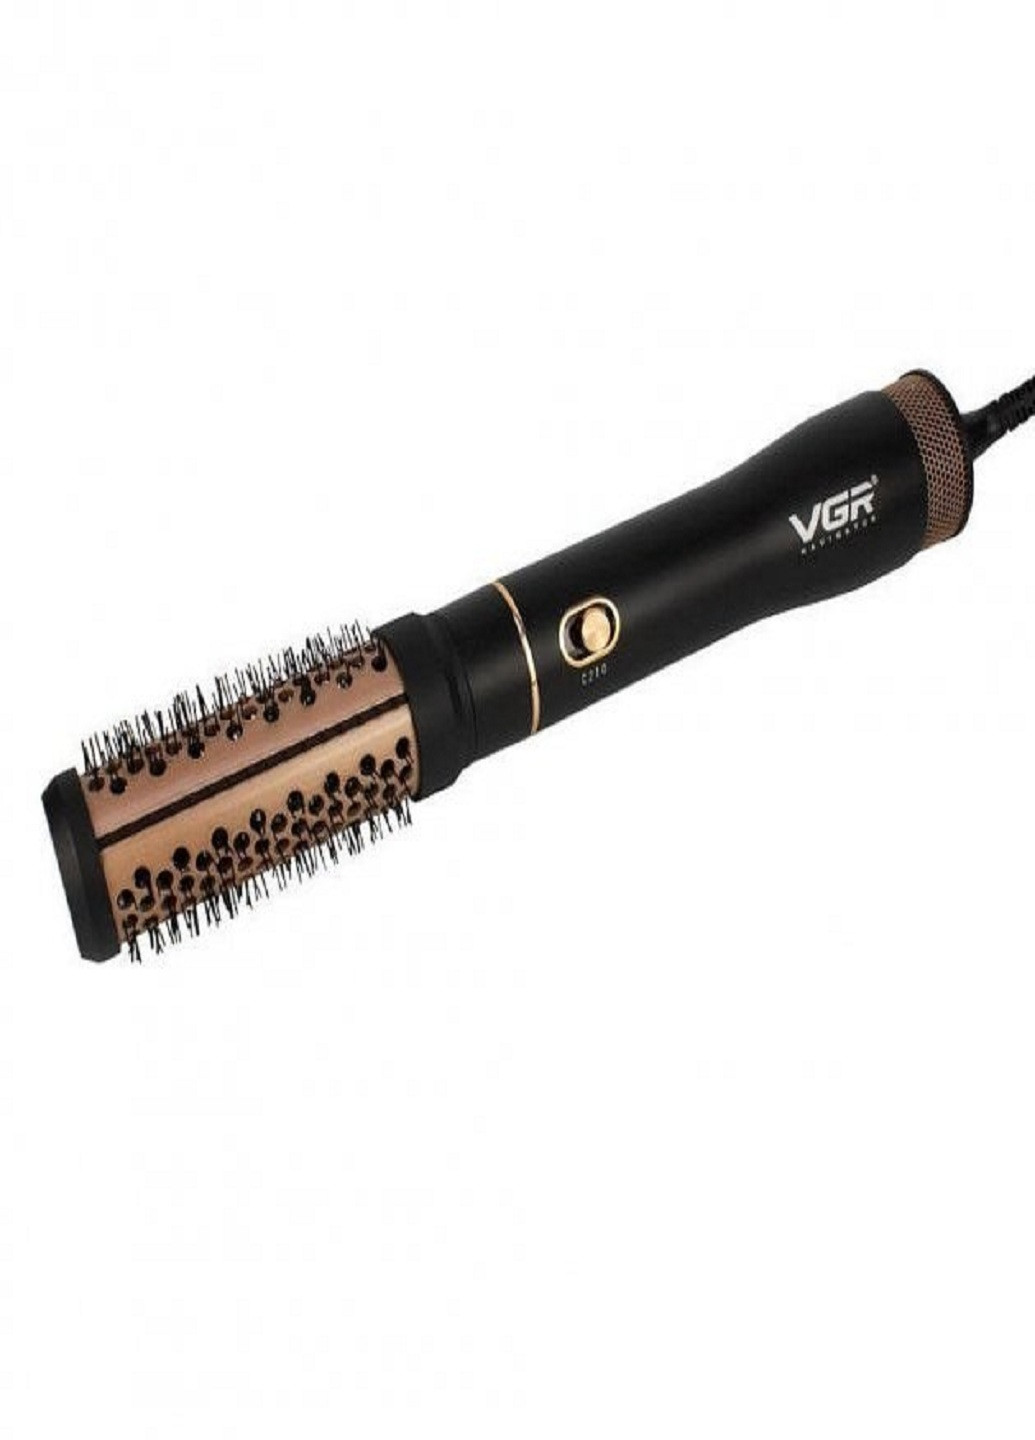 Фен гребінець брашинг для укладання та сушіння волосся V559 VGR (254110779)